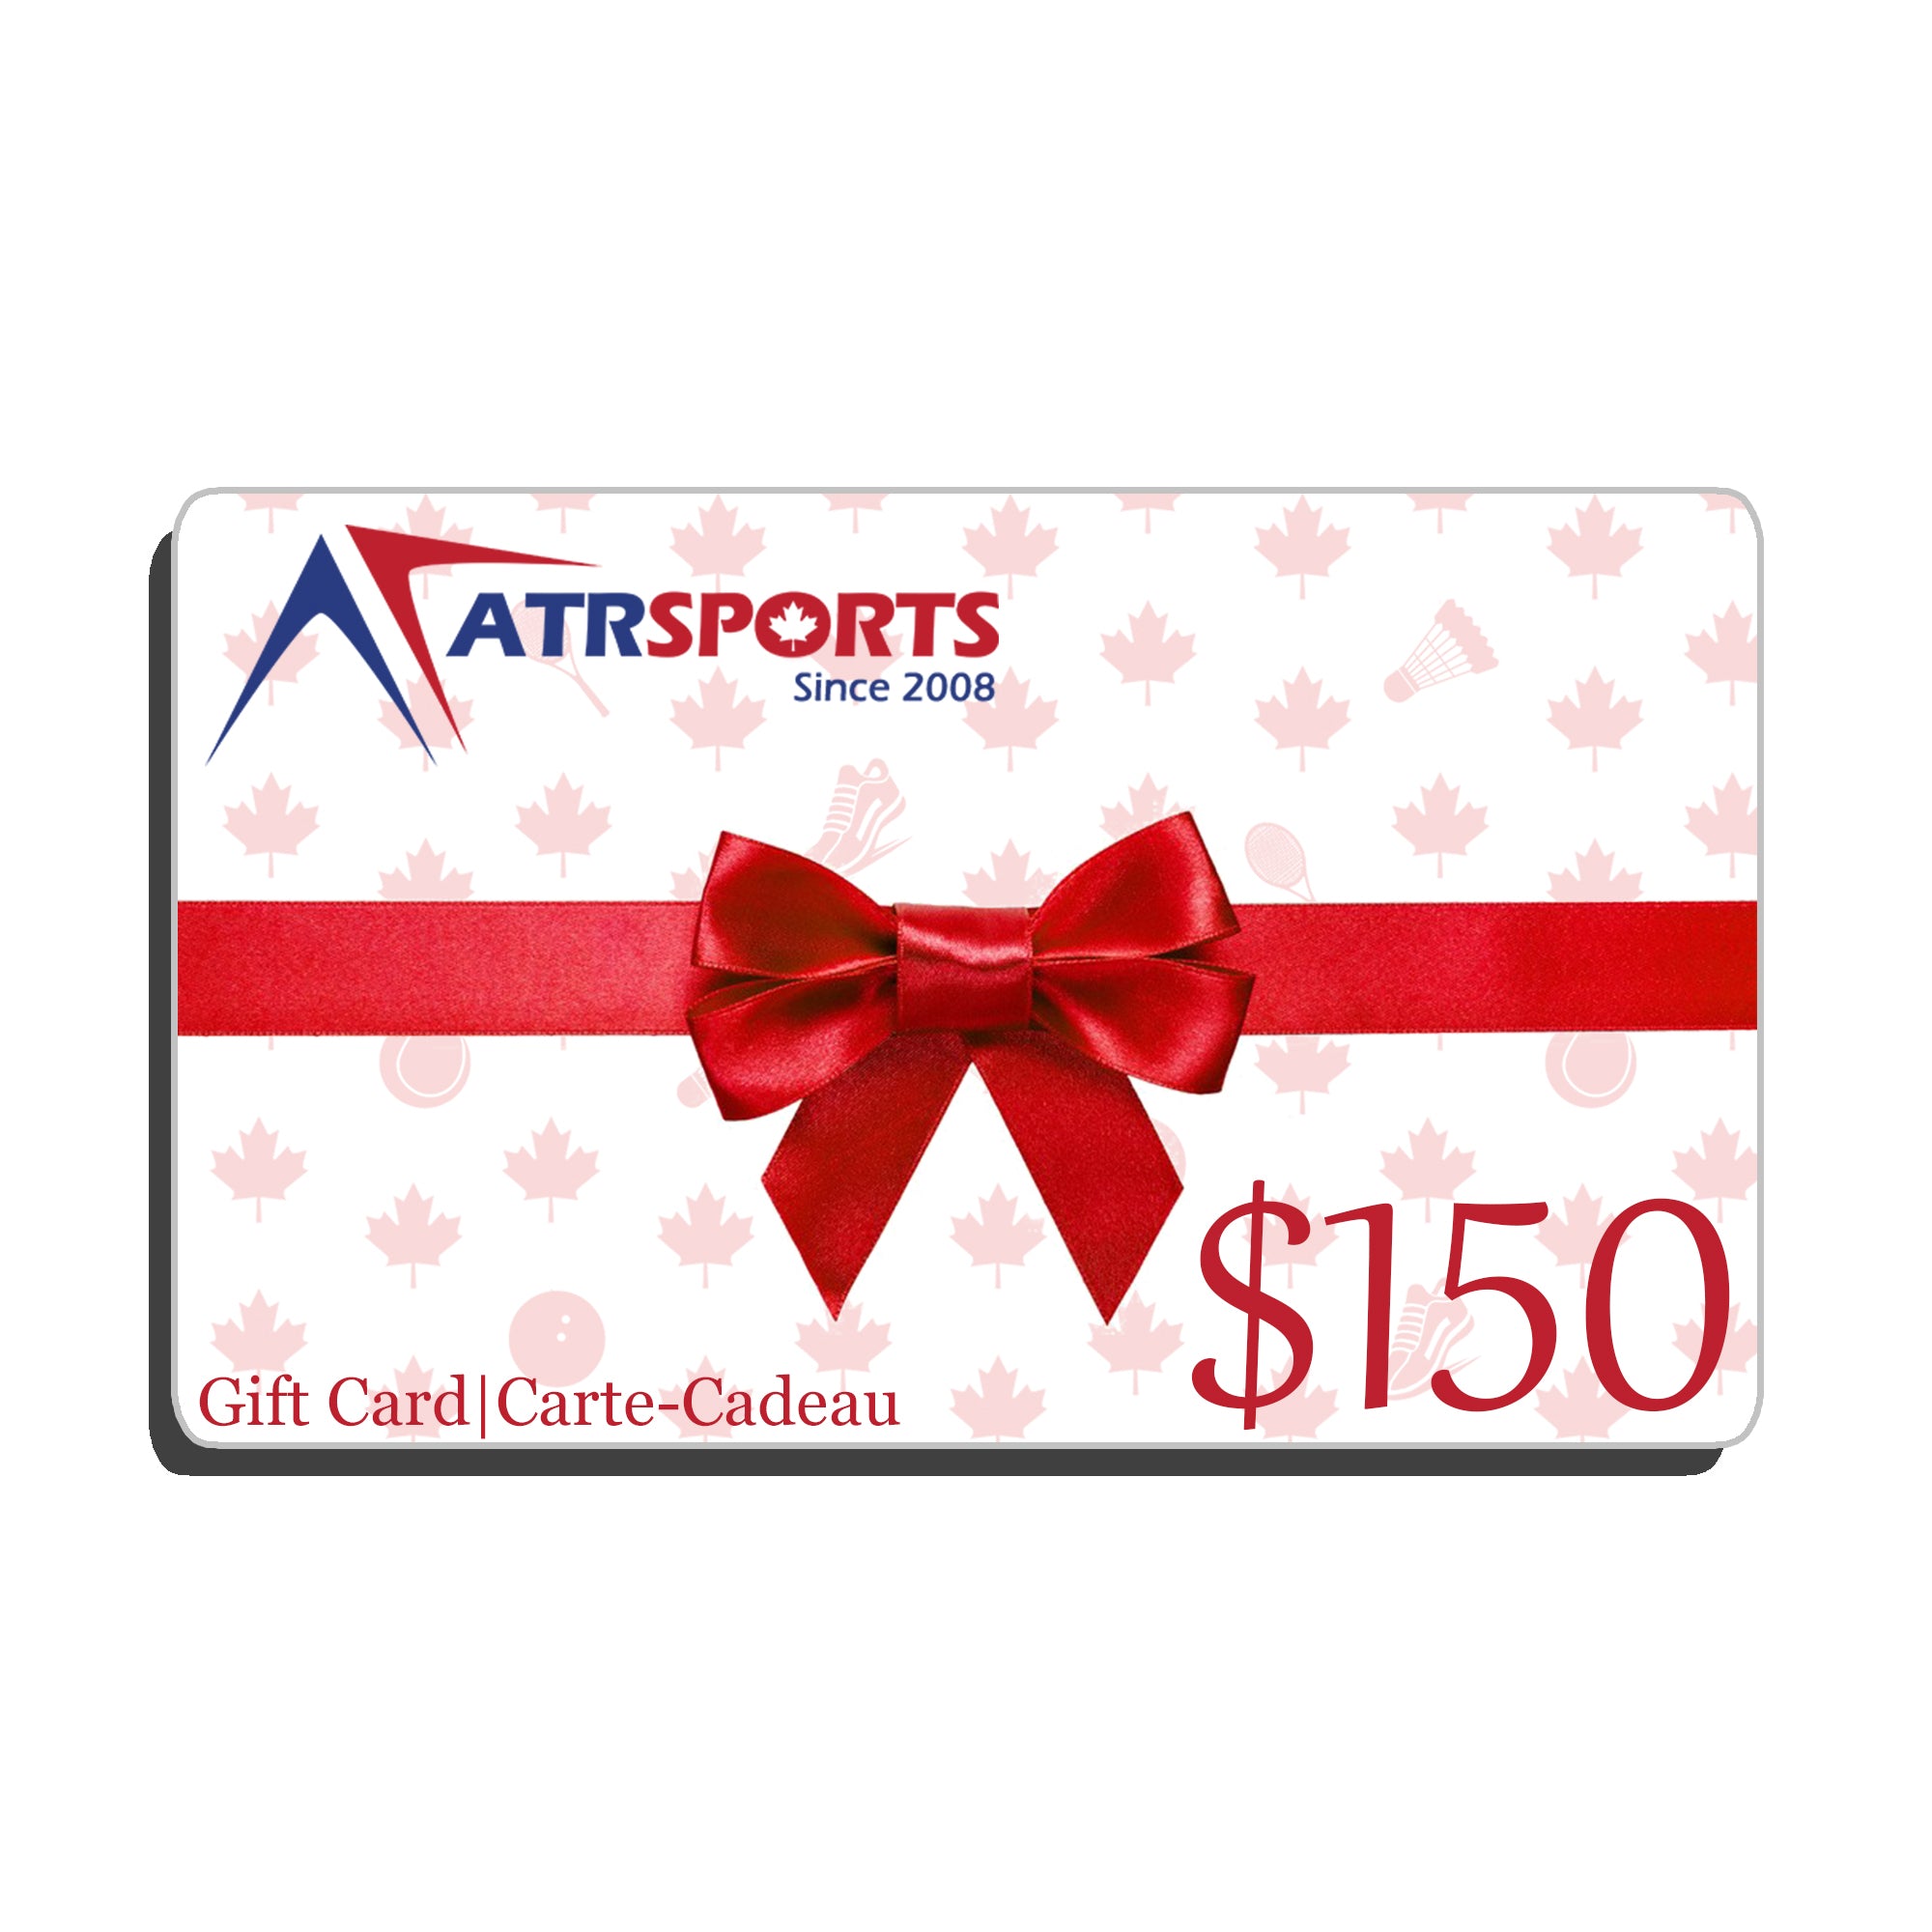 ATR Sports Gift Card